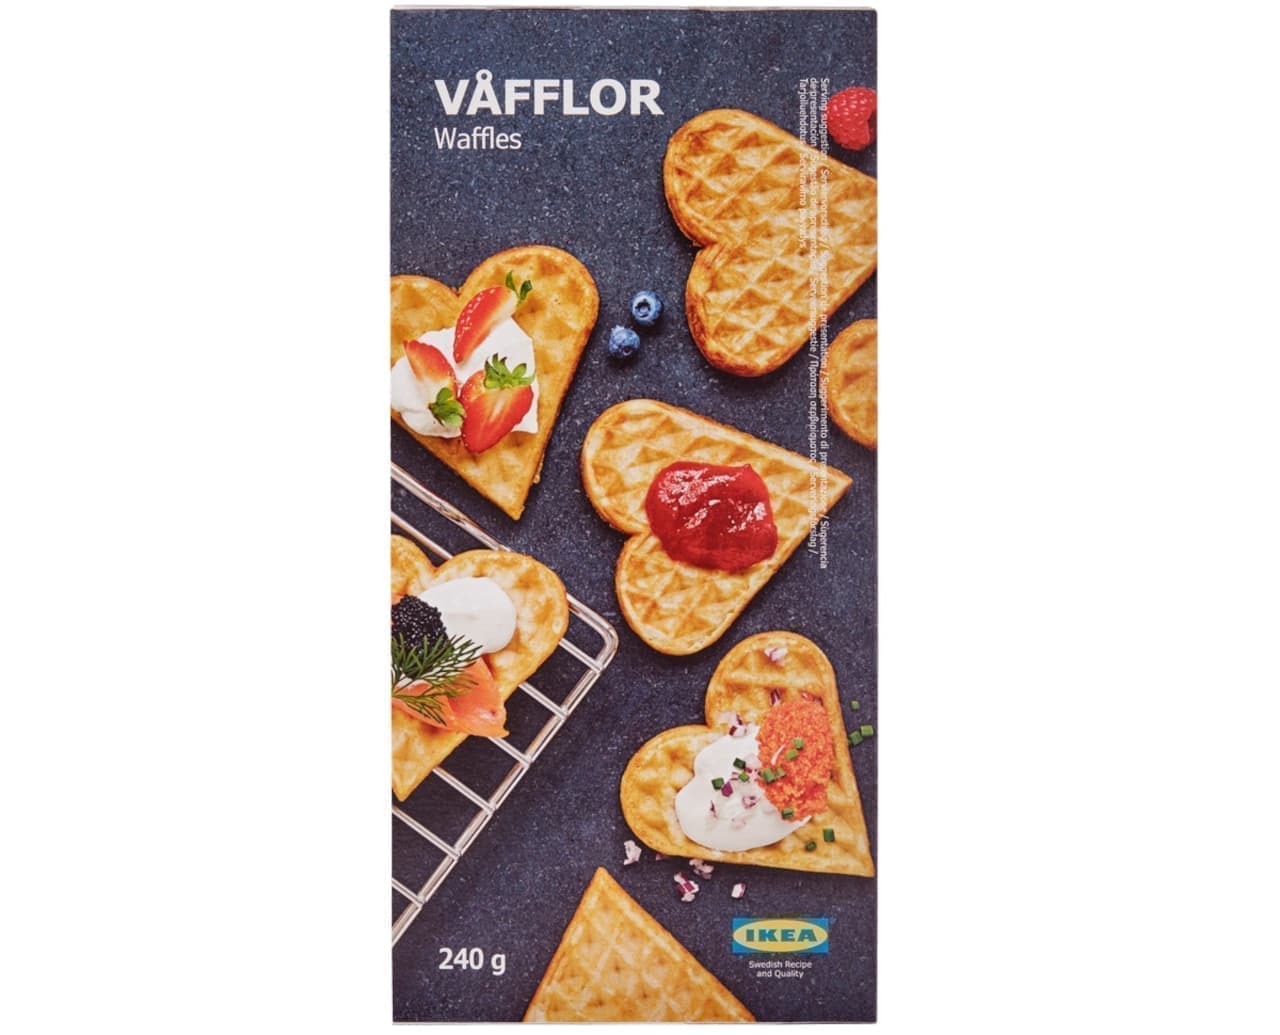 IKEA "VAFFLOR Waffle